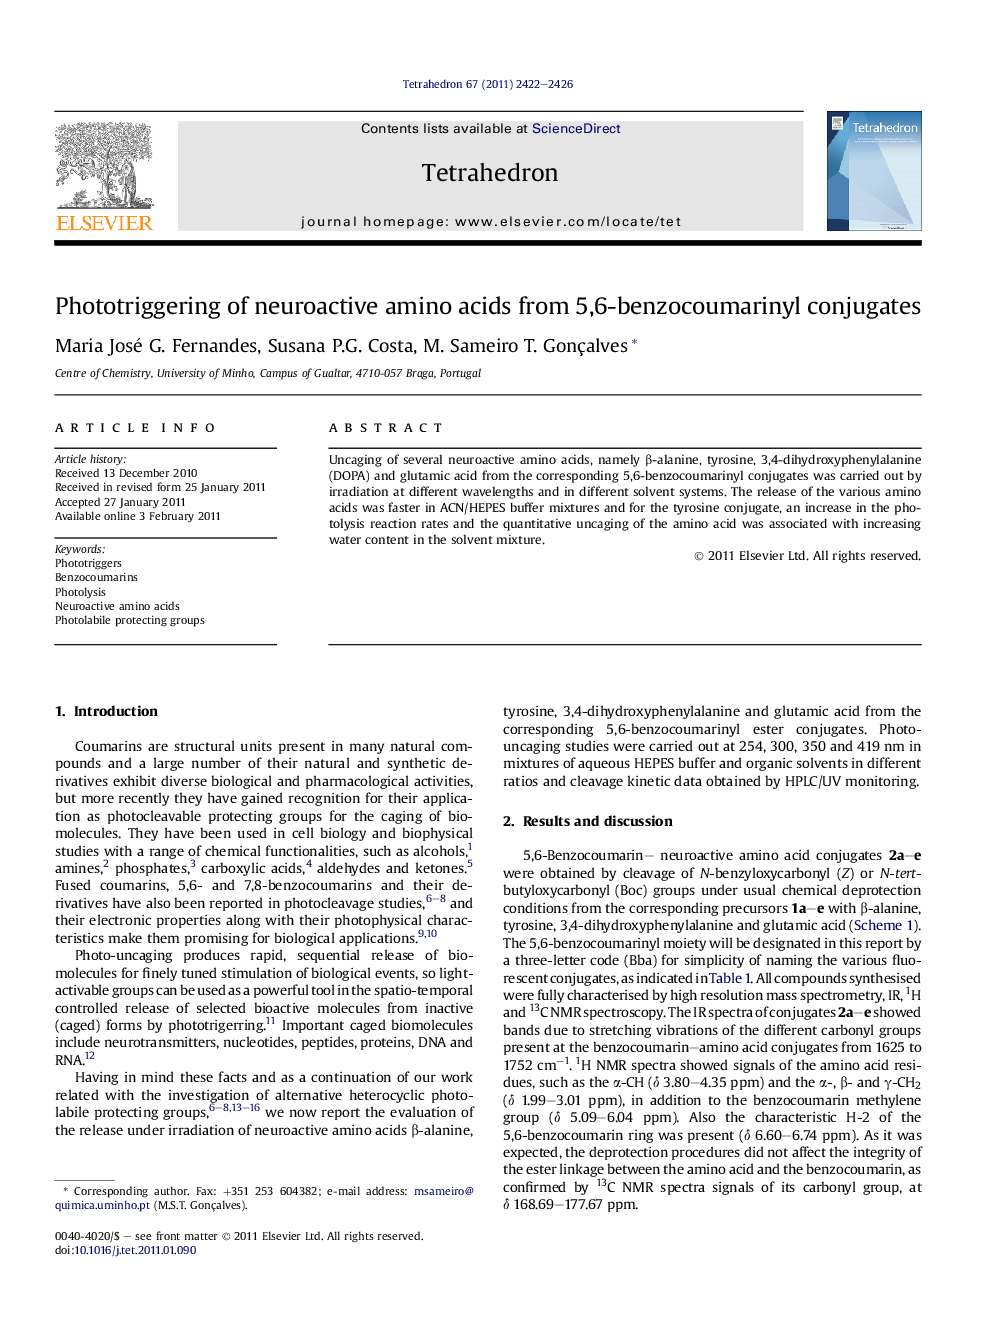 Phototriggering of neuroactive amino acids from 5,6-benzocoumarinyl conjugates